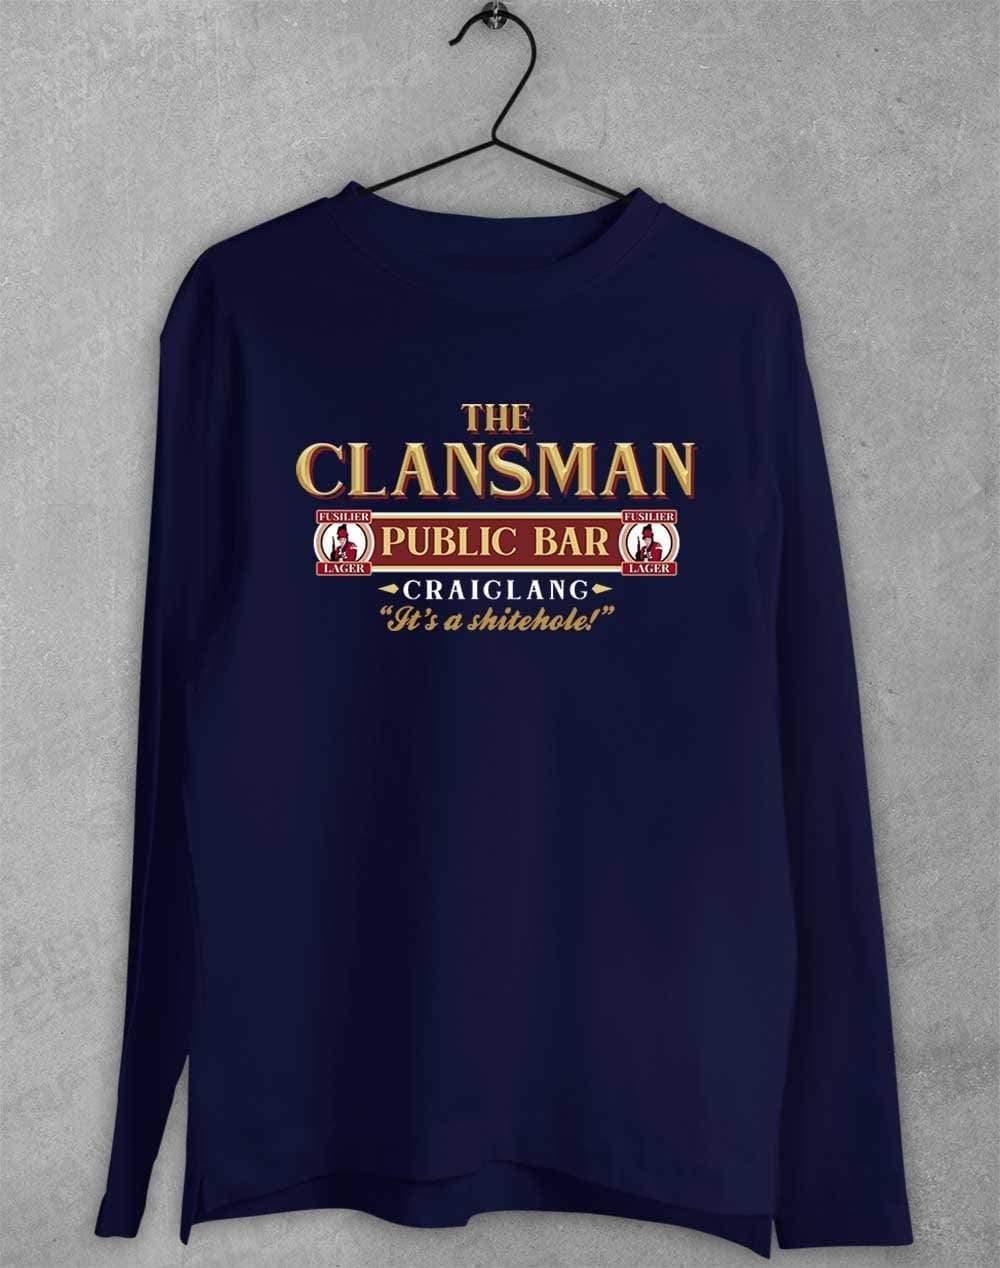 The Clansman Craiglang Long Sleeve T-Shirt S / Navy  - Off World Tees